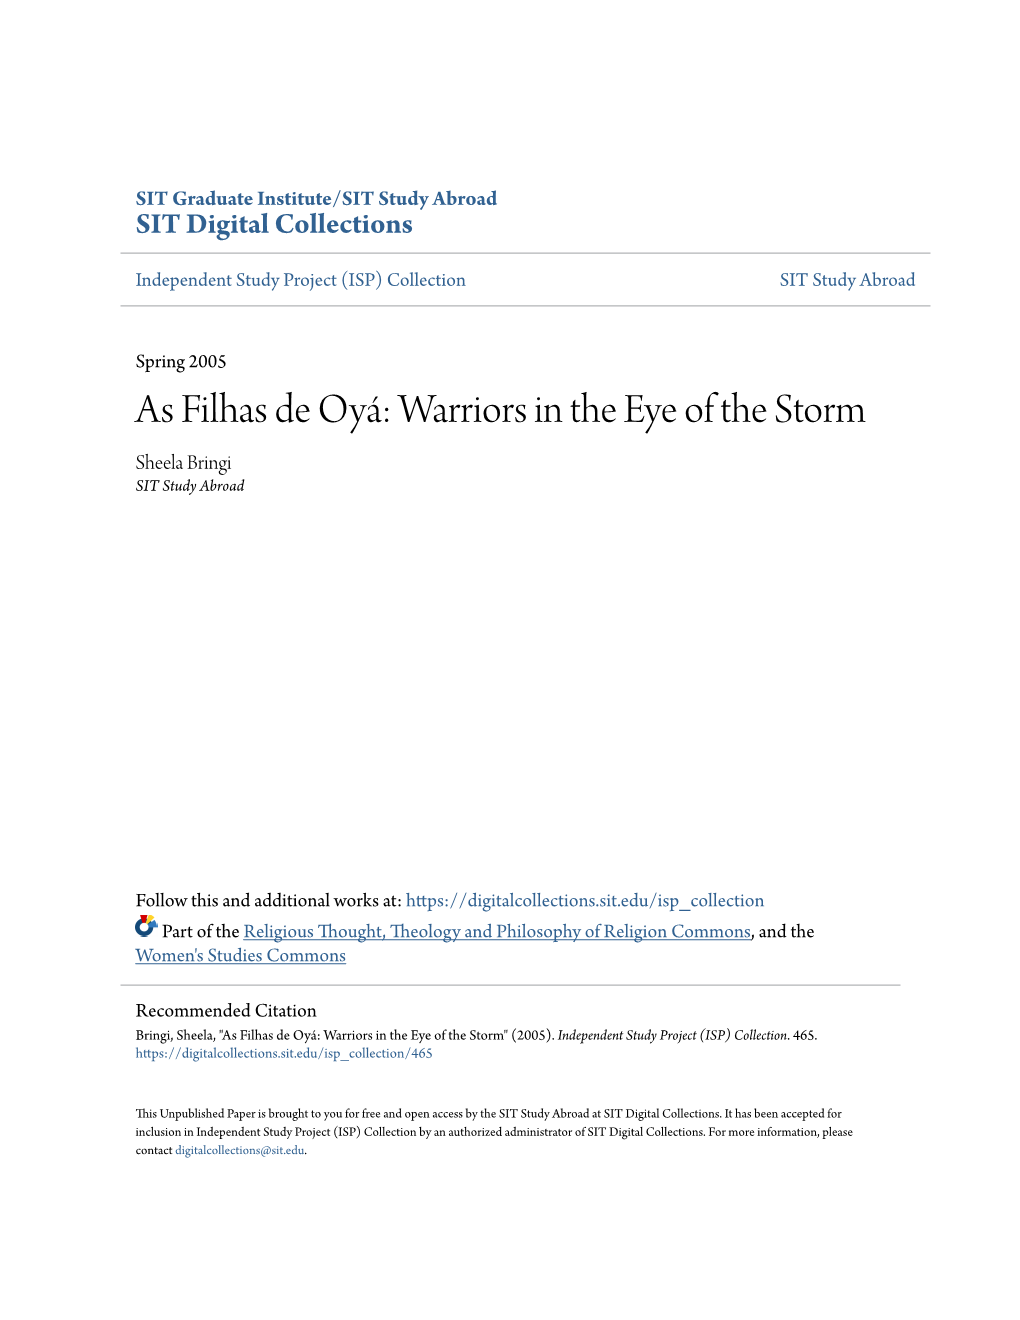 As Filhas De Oyá: Warriors in the Eye of the Storm Sheela Bringi SIT Study Abroad